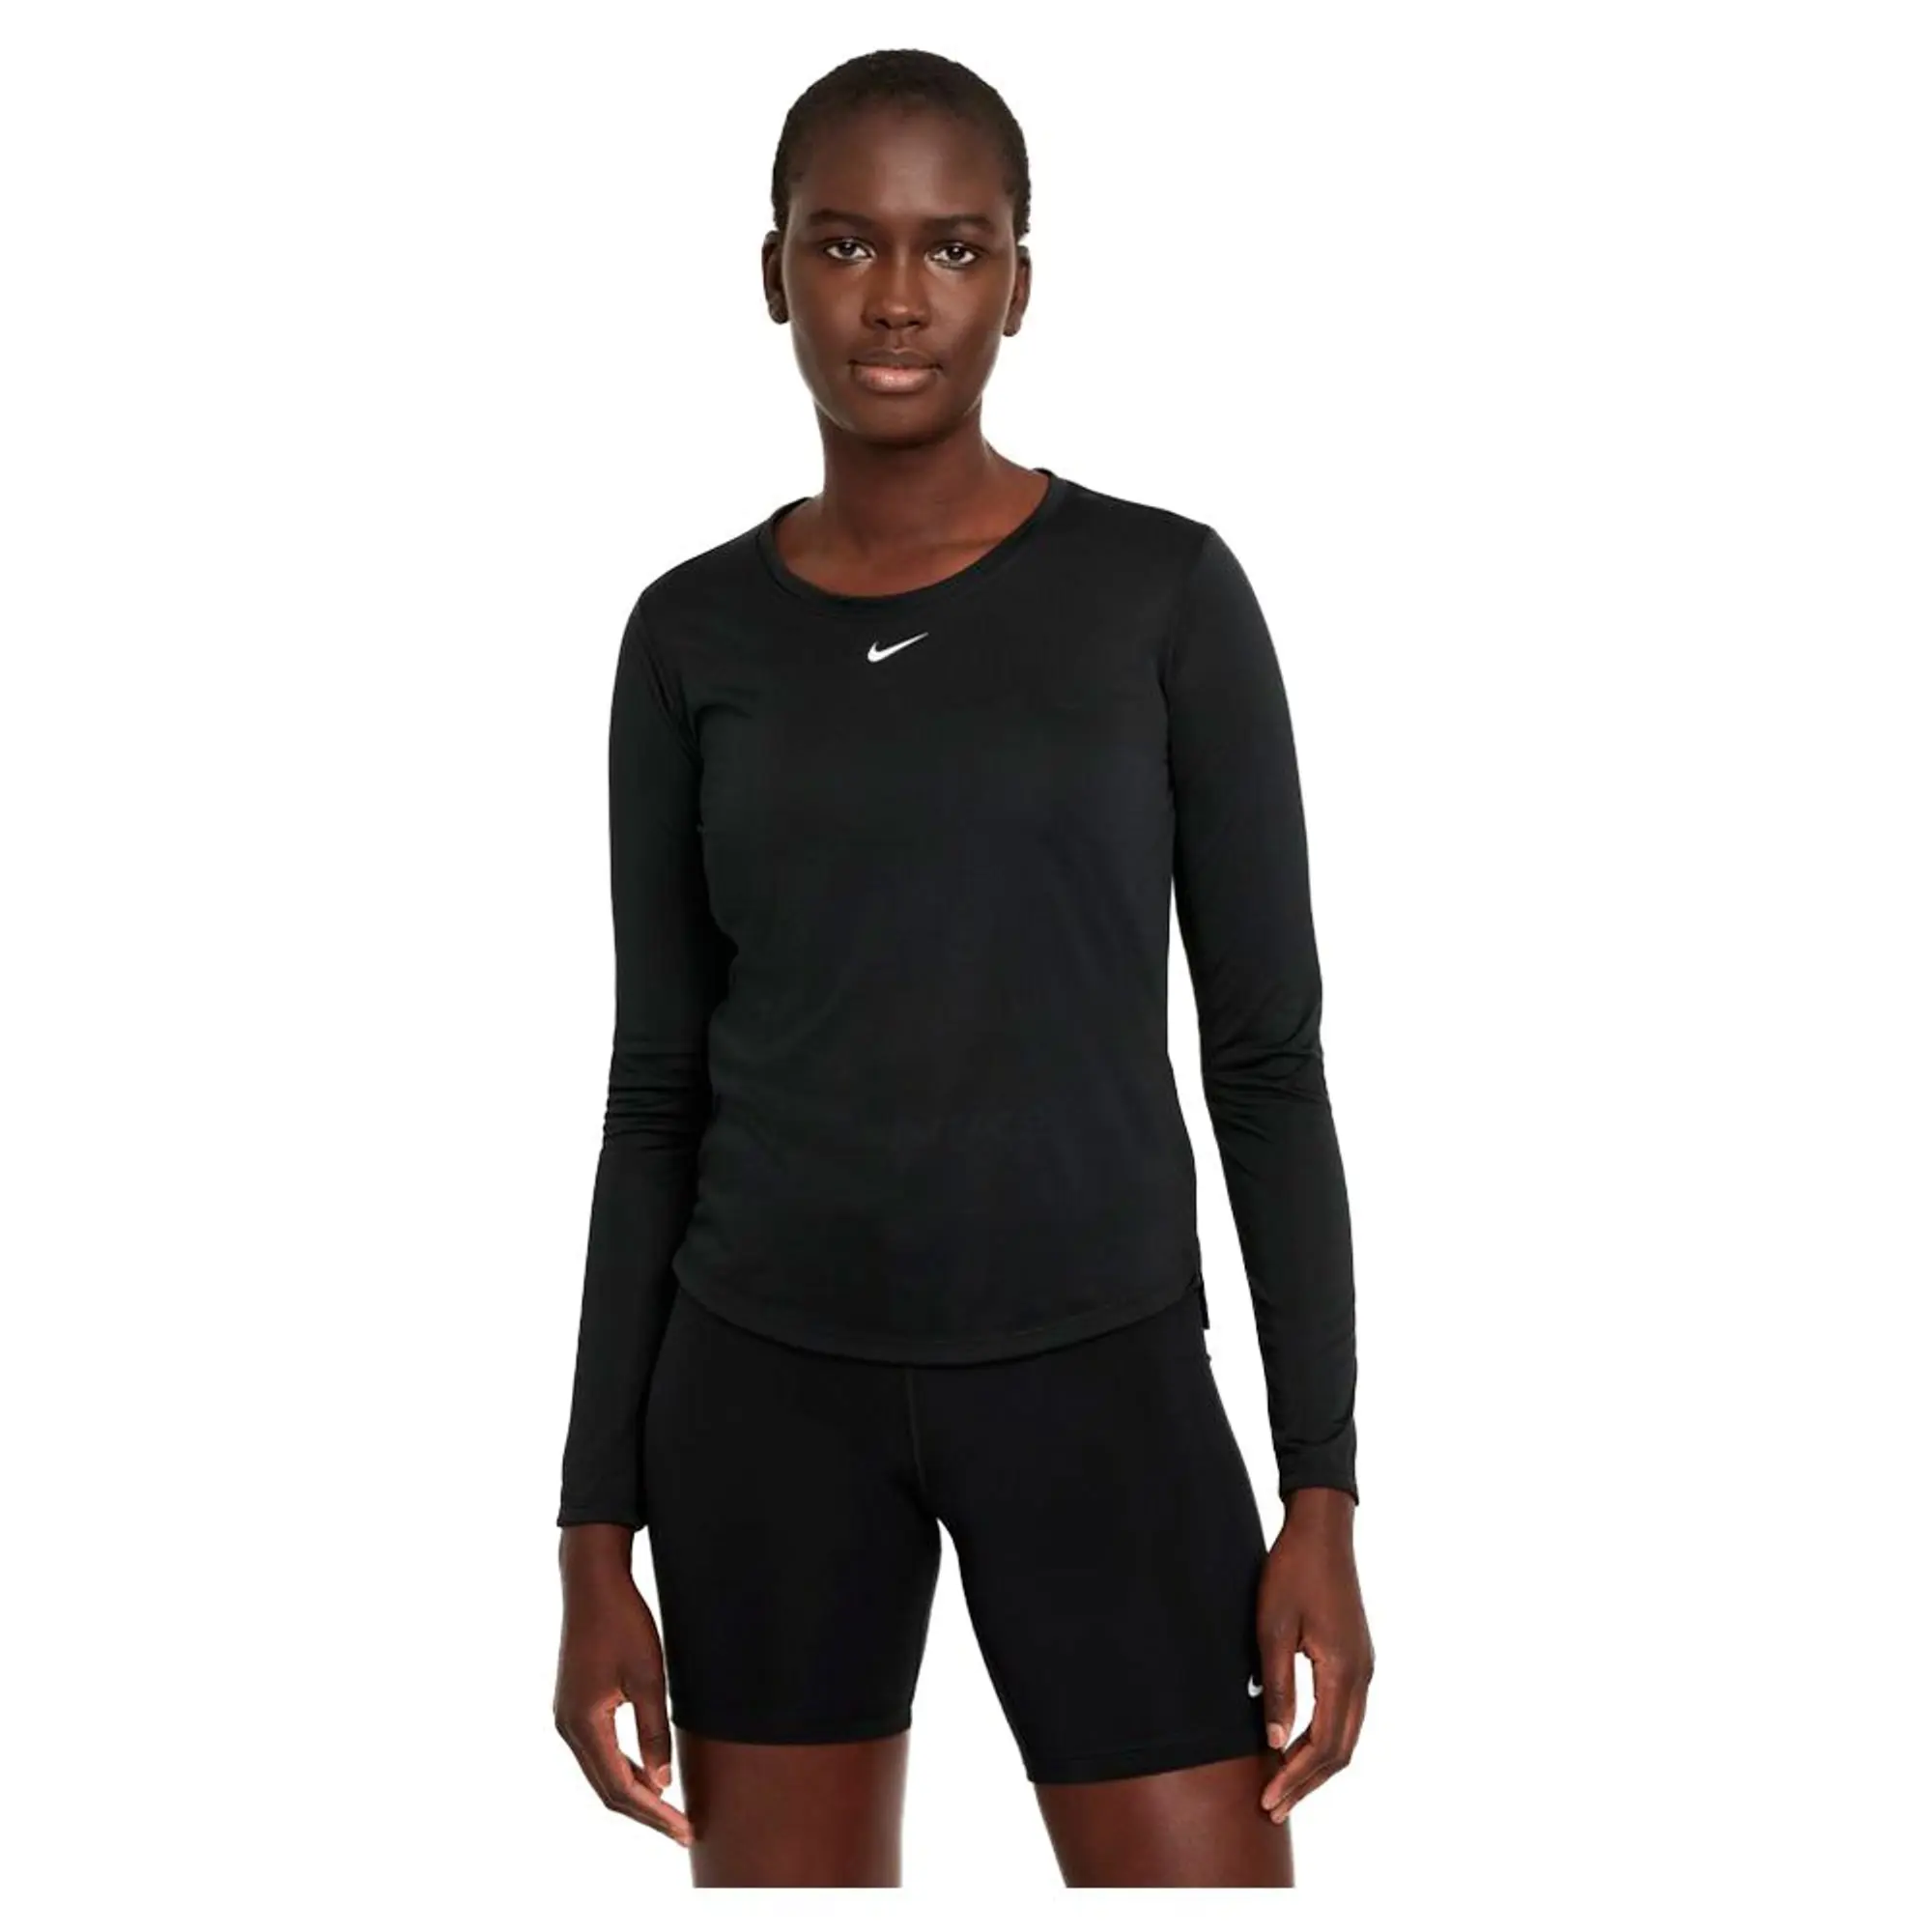 Nike Dri-FIT One Women's Standard Fit Long-Sleeve Top - Black